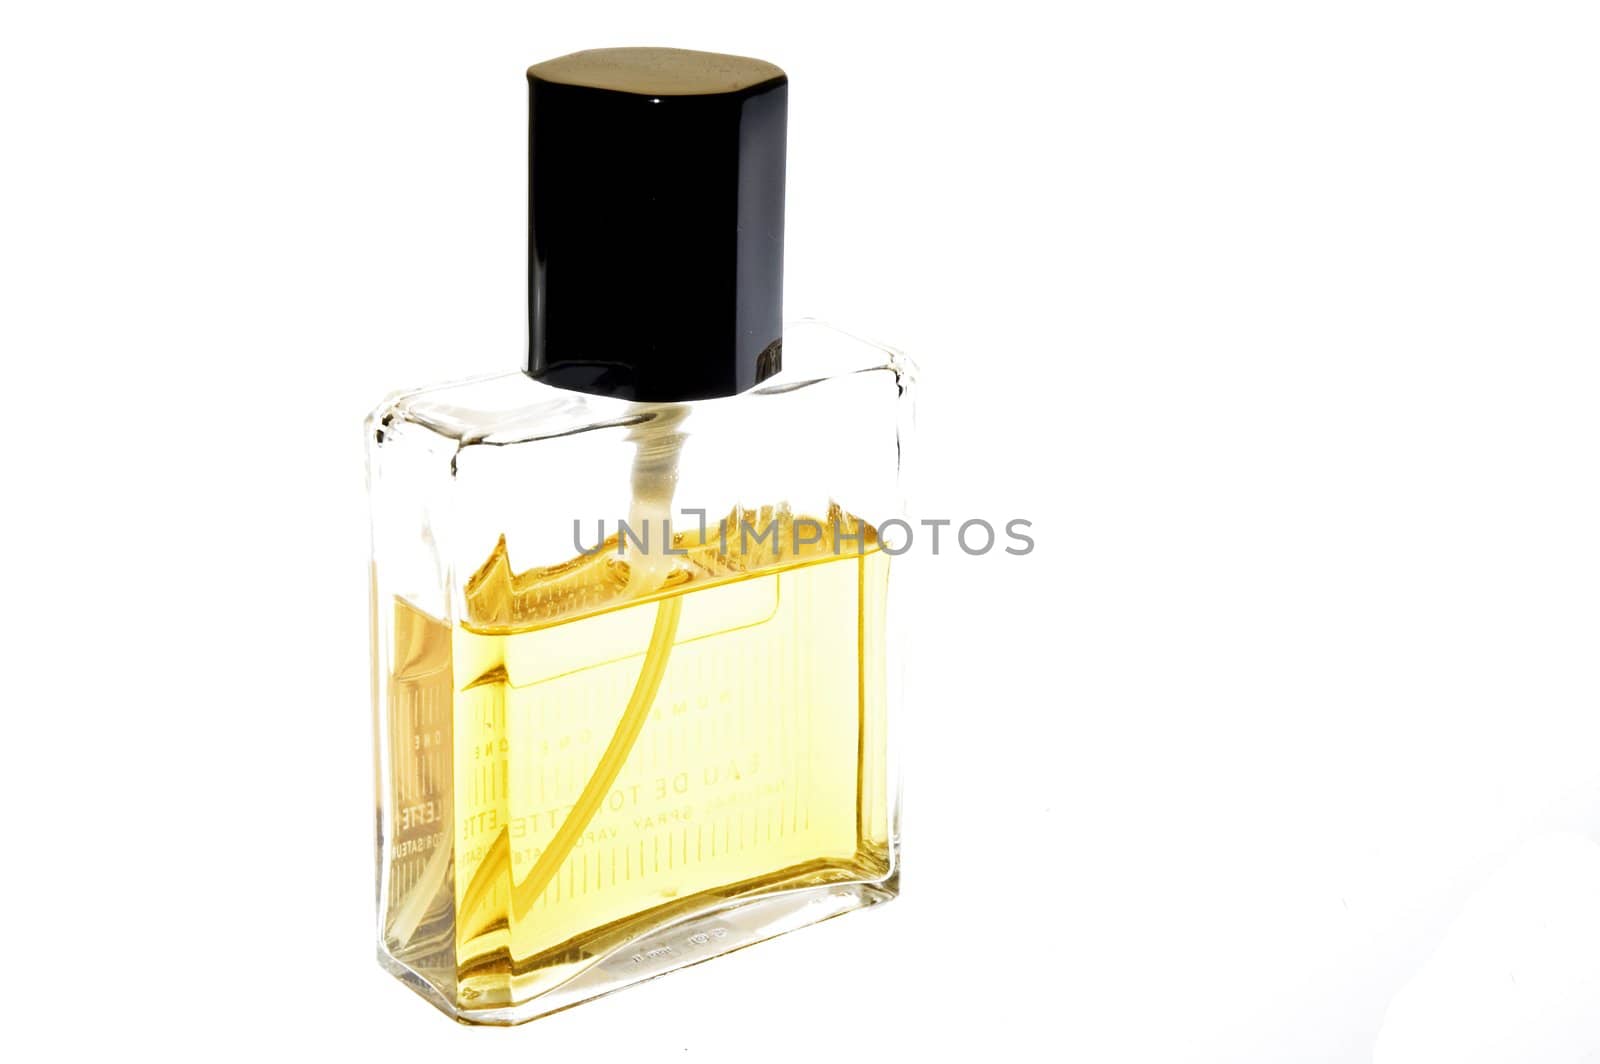 Perfume for men by Michalowski